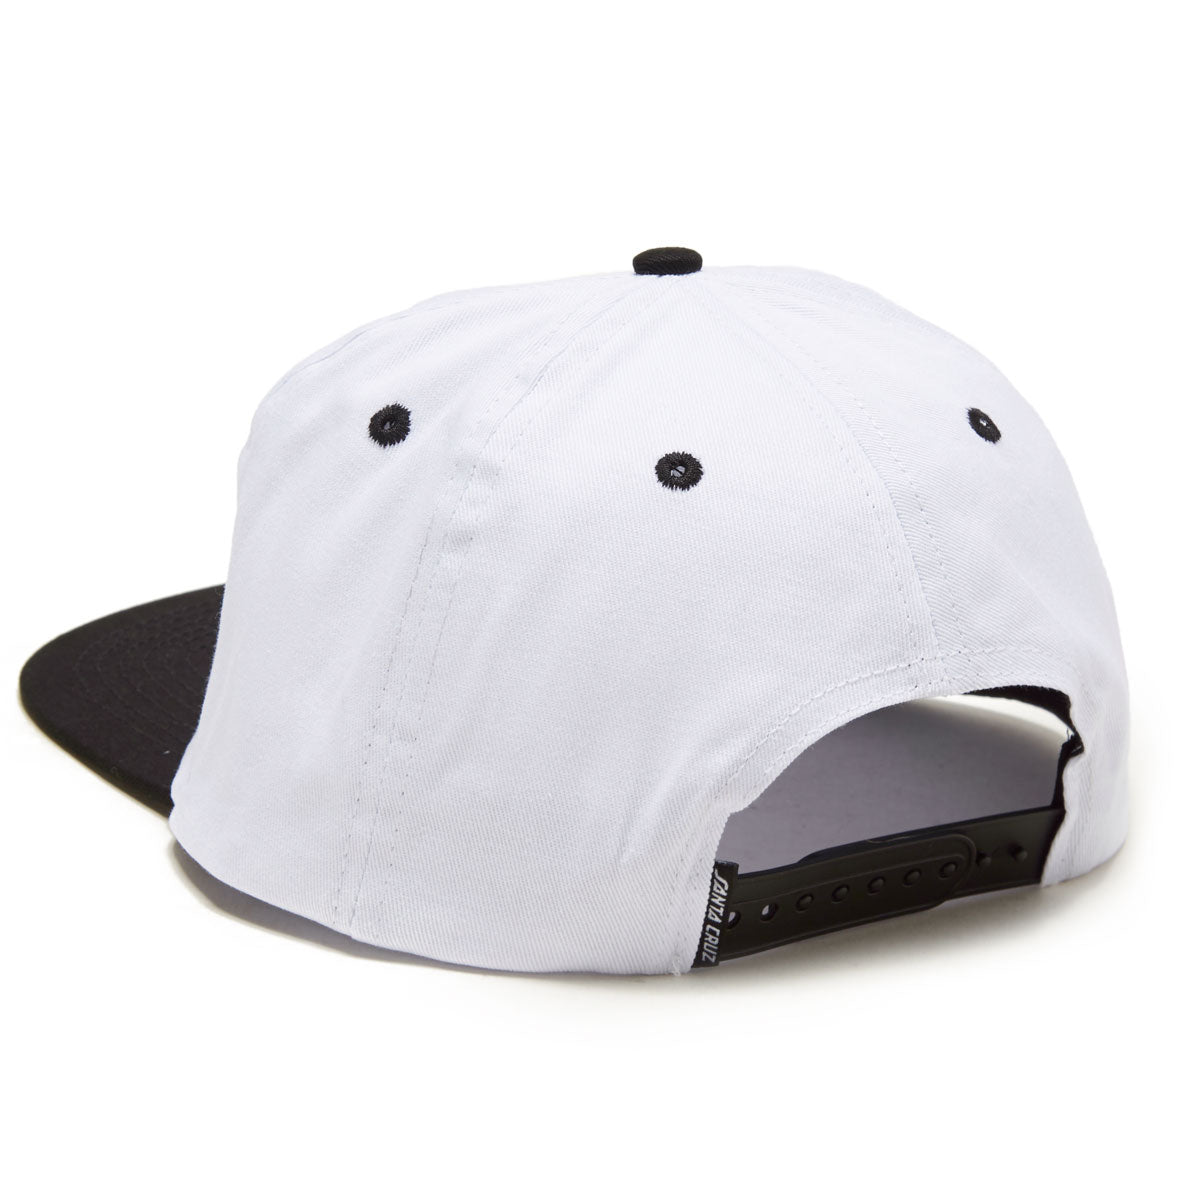 Santa Cruz x Pokemon SC Pikachu Snapback Mid Profile Hat - White/Black image 2